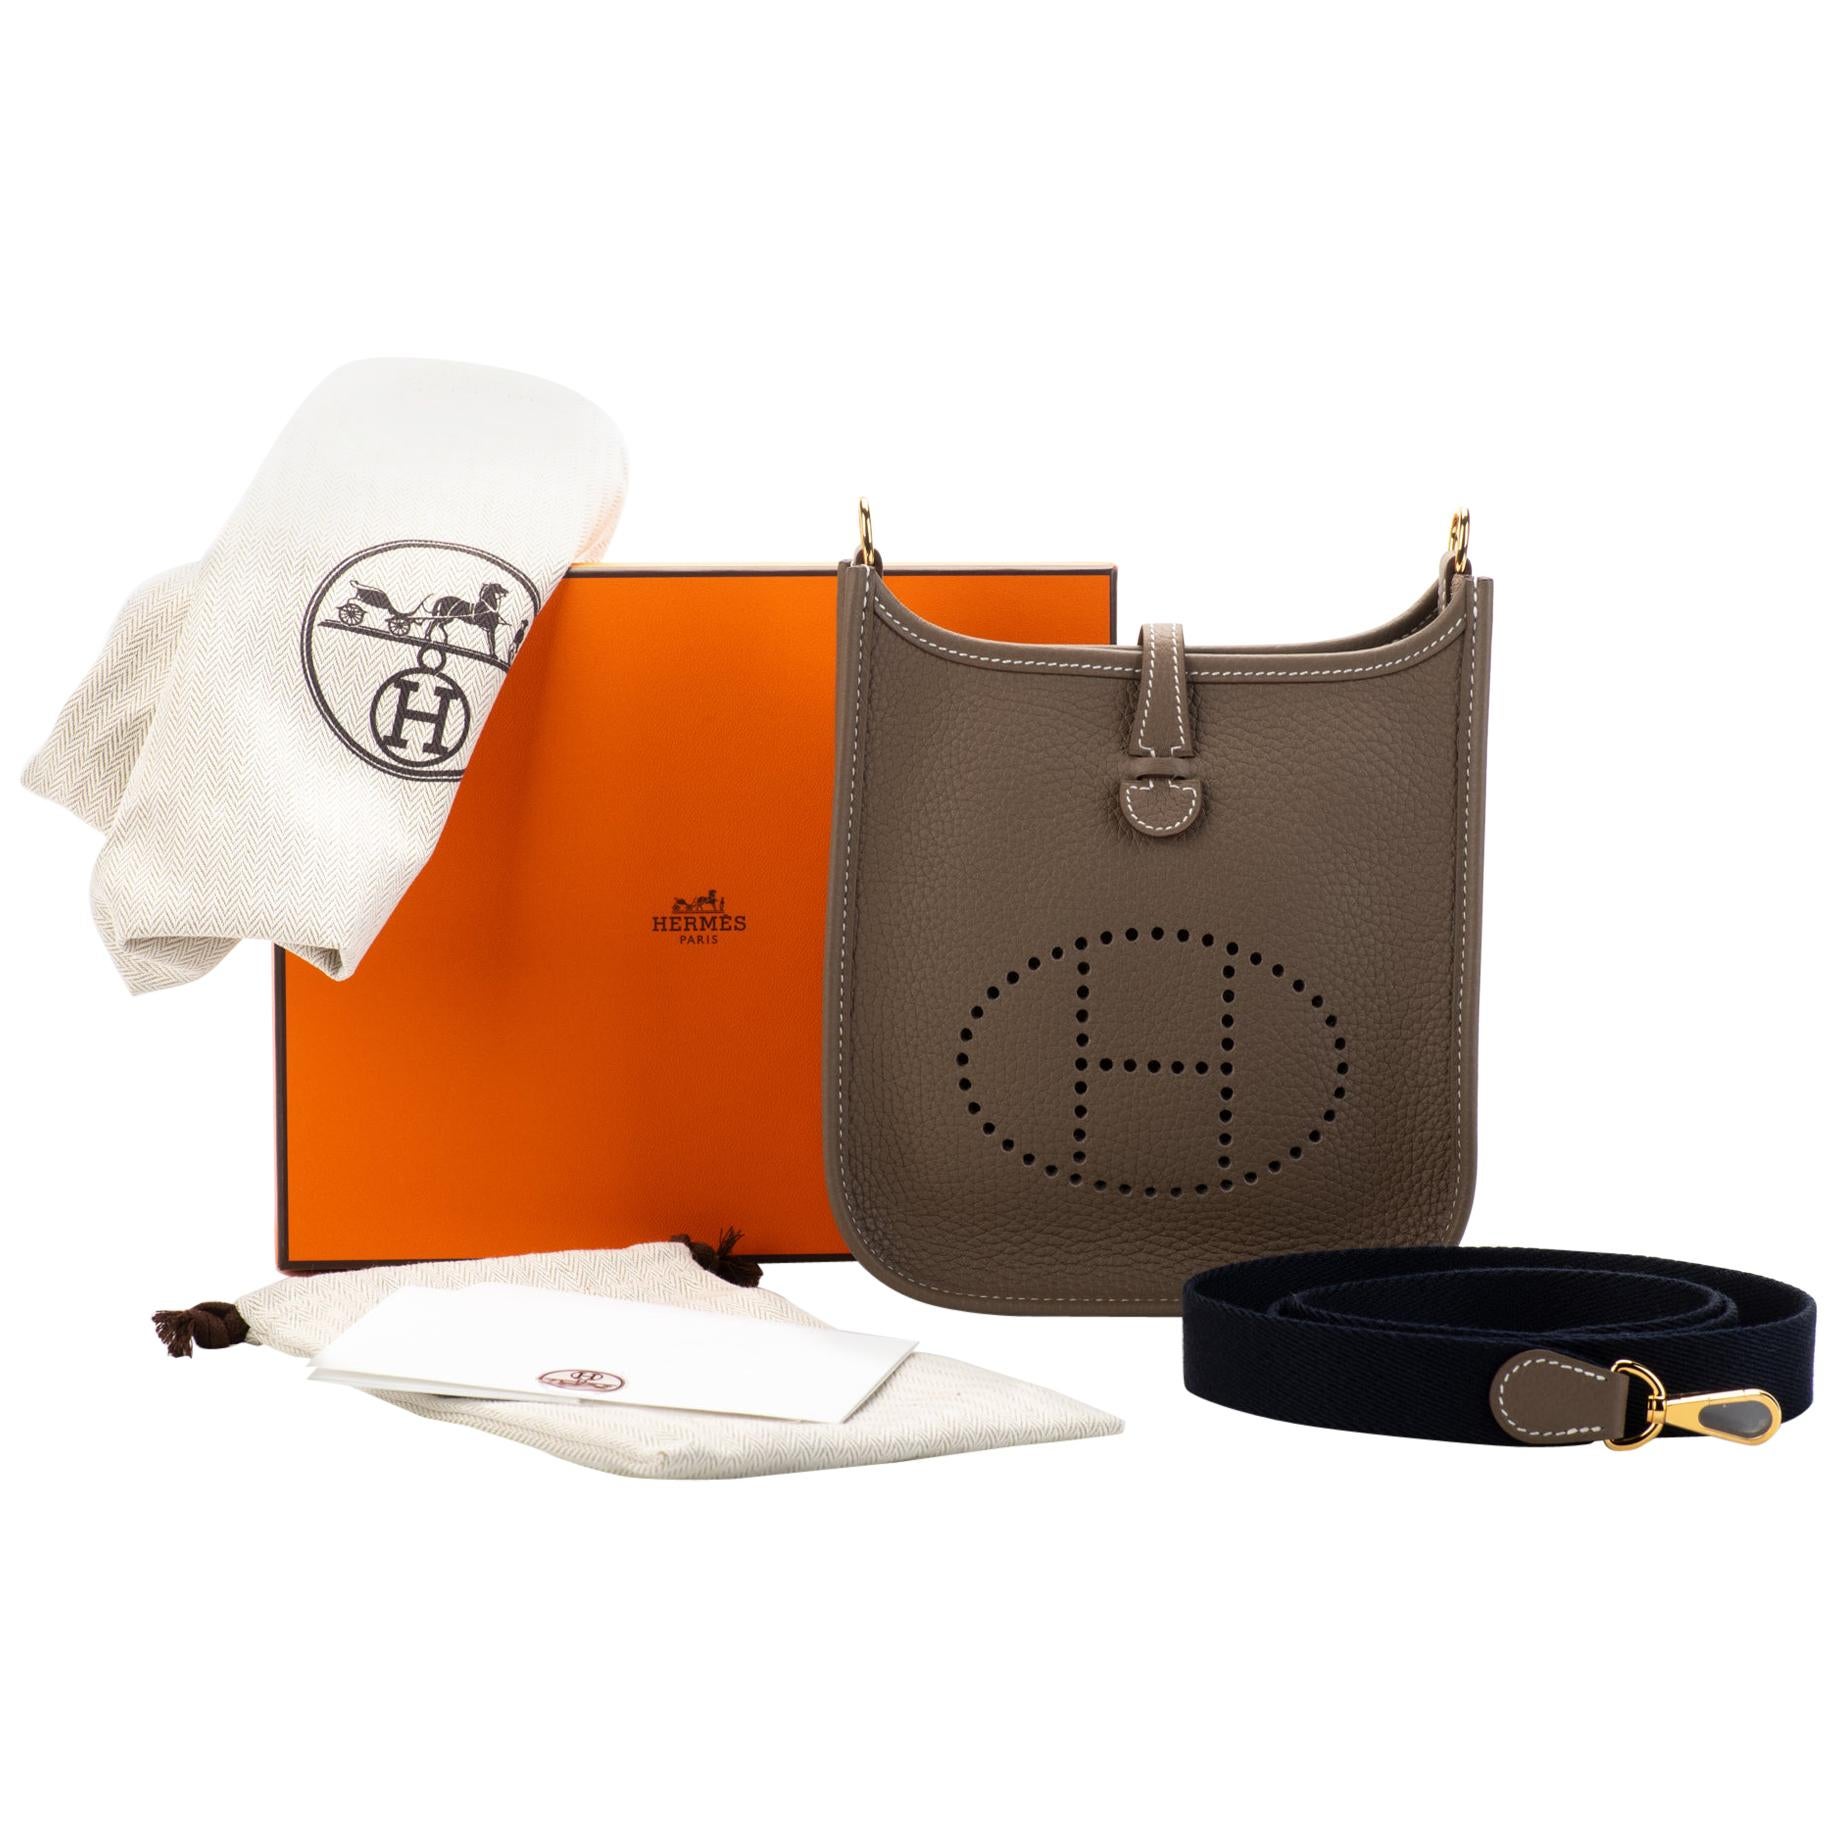 Hermès Evelyne Etoupe - Brand New! - Designer WishBags